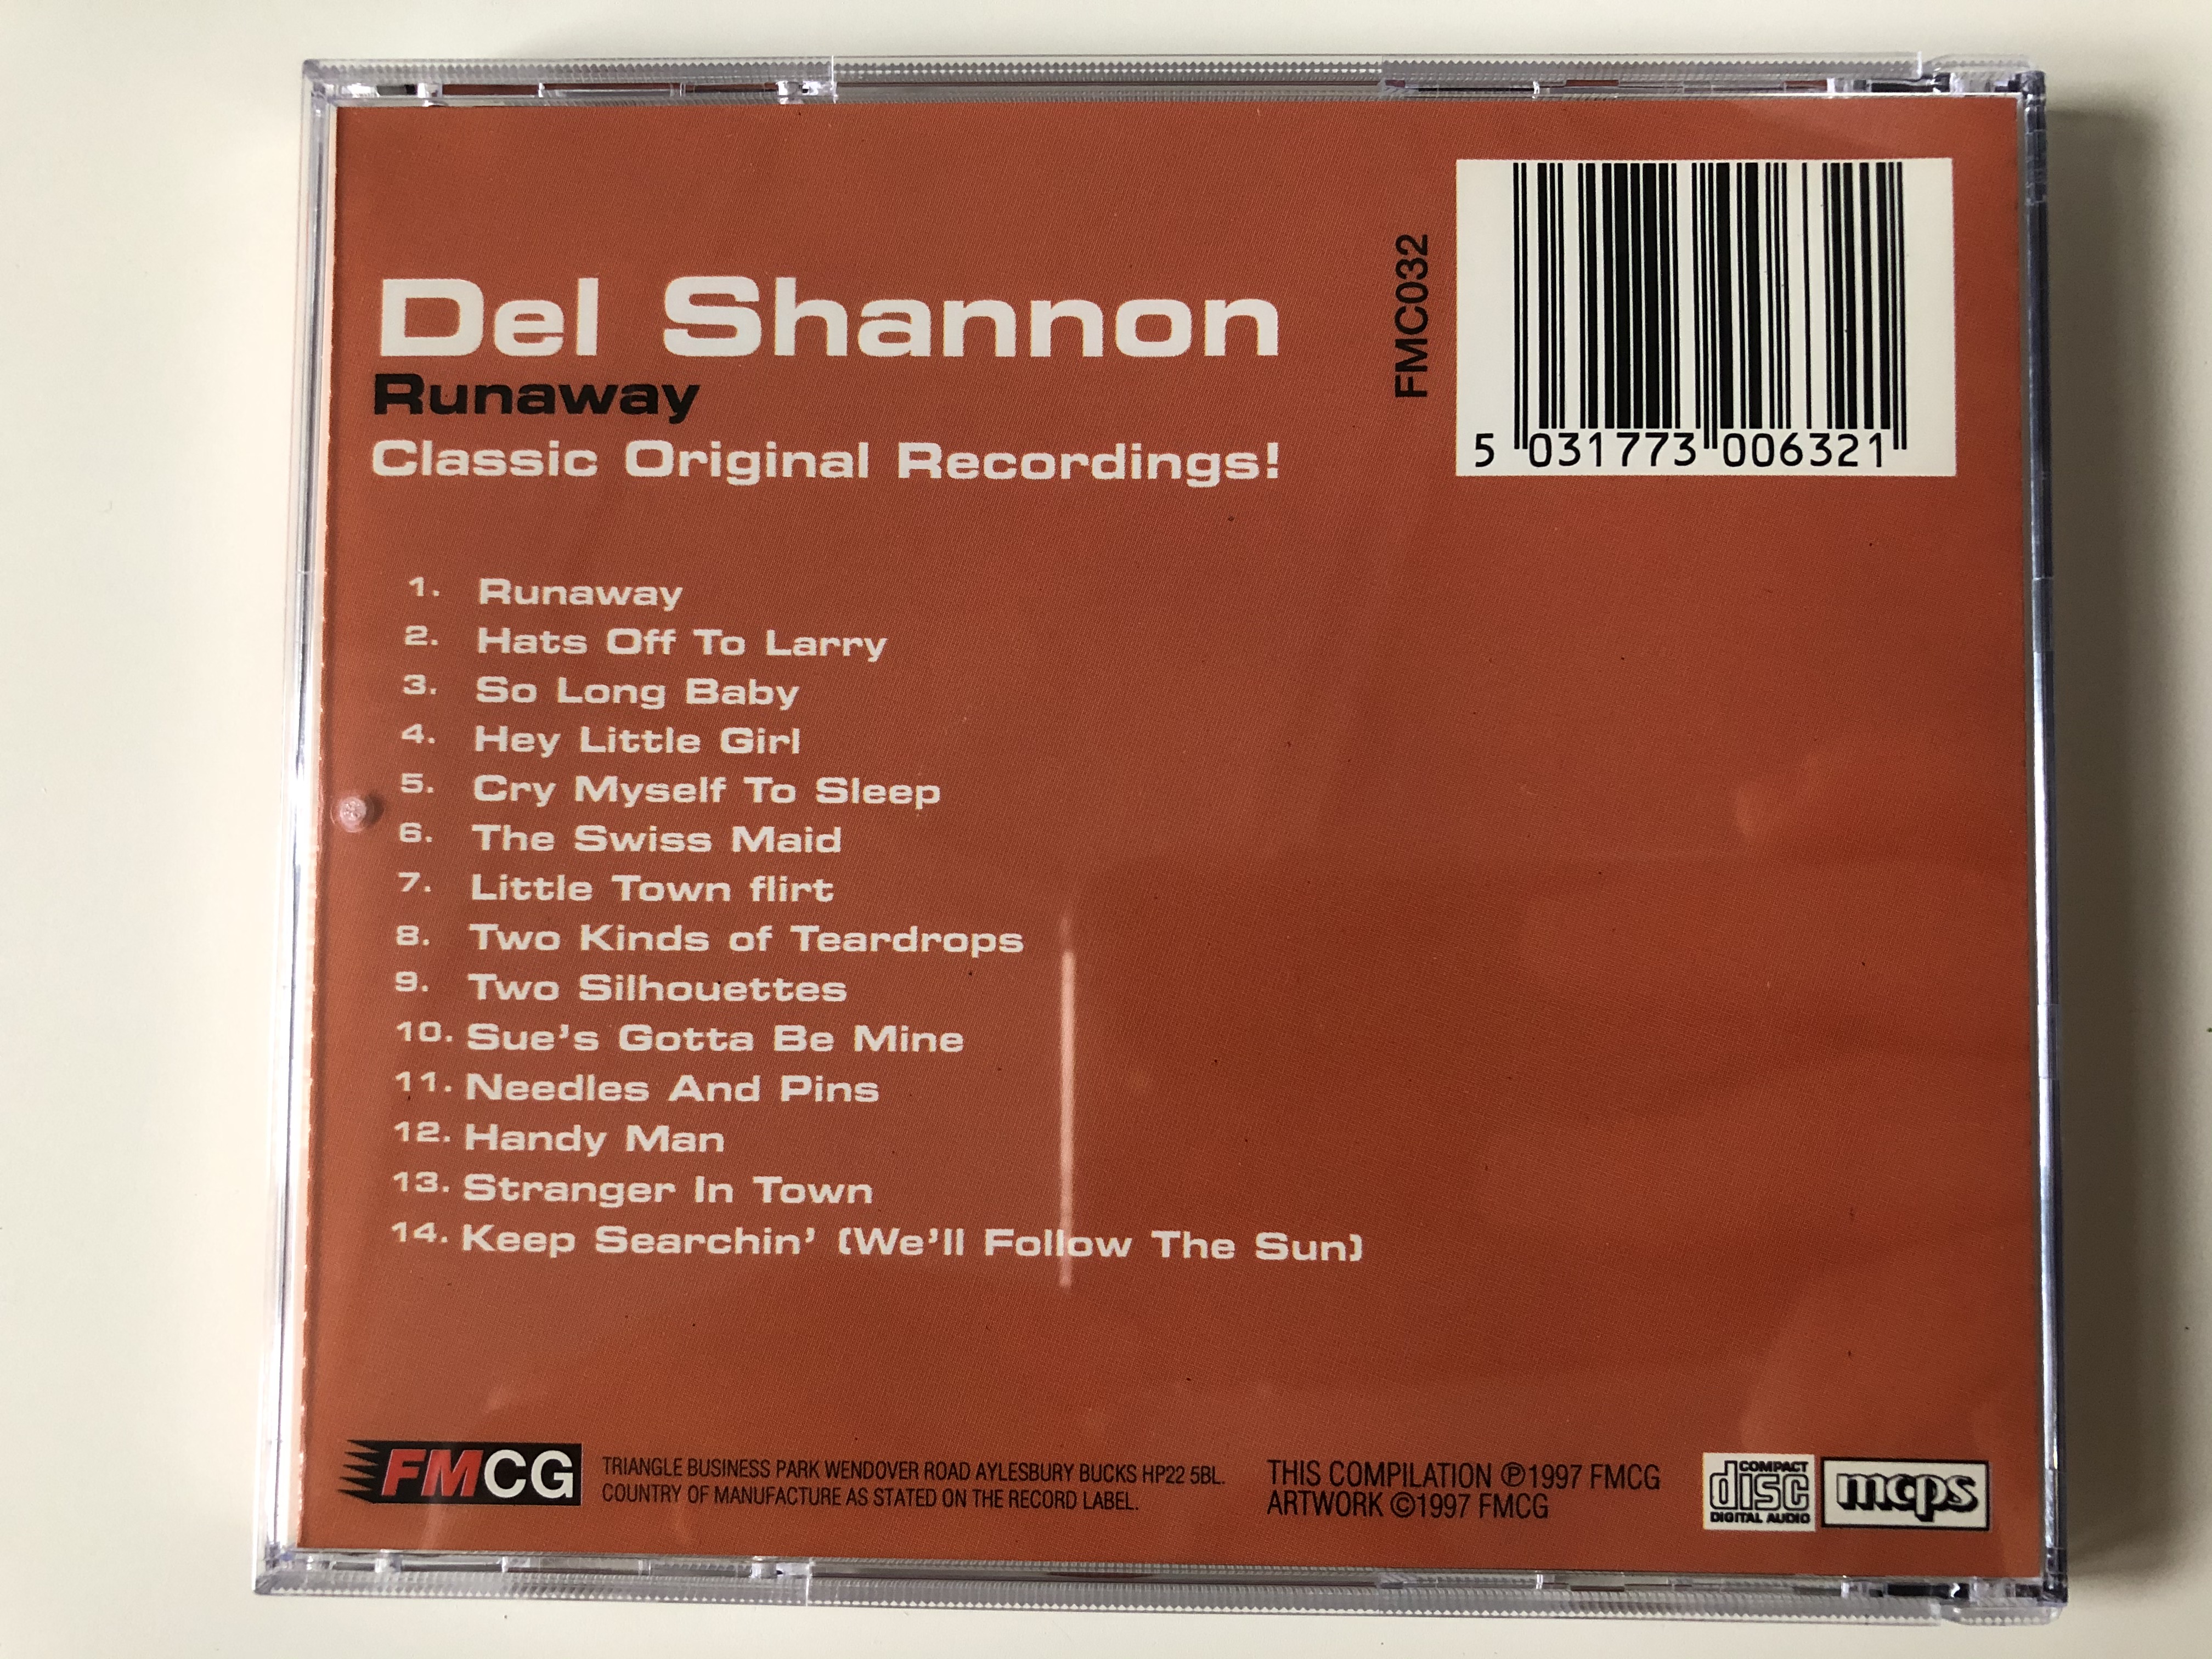 del-shannon-runaway-classic-original-recordings-fmcg-audio-cd-1997-fmc032-4-.jpg